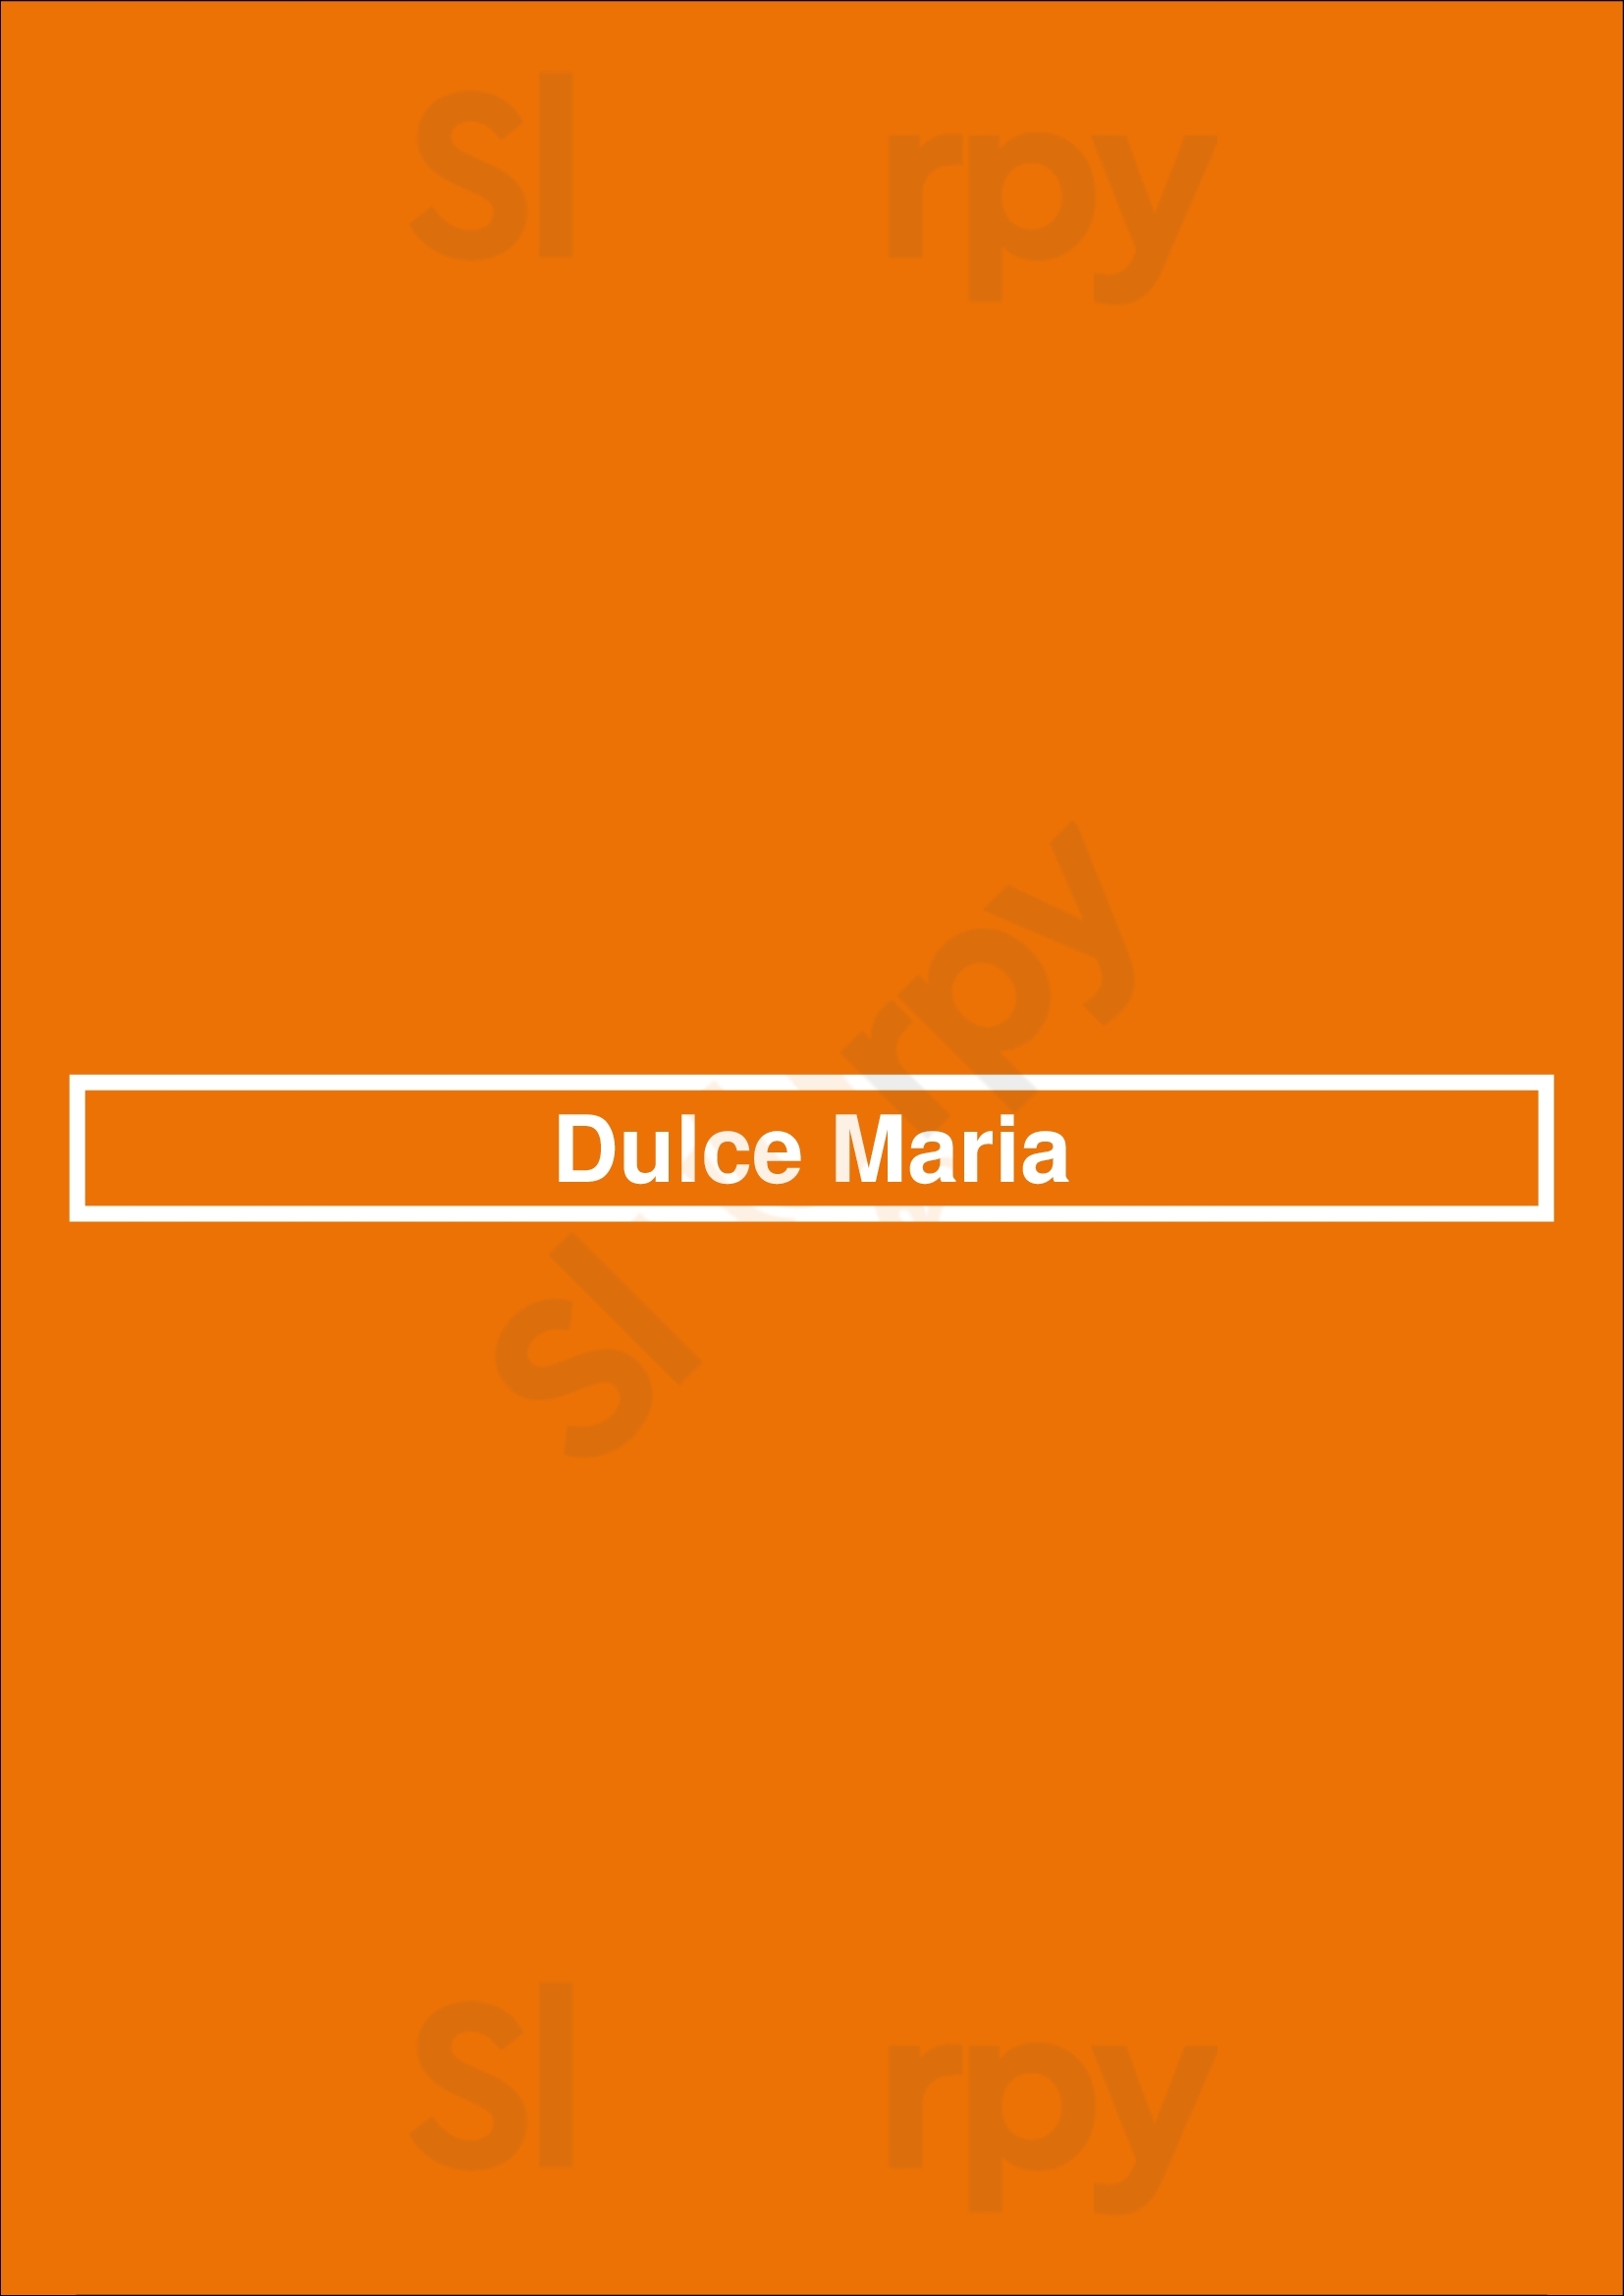 Dulce Maria Martínez Menu - 1